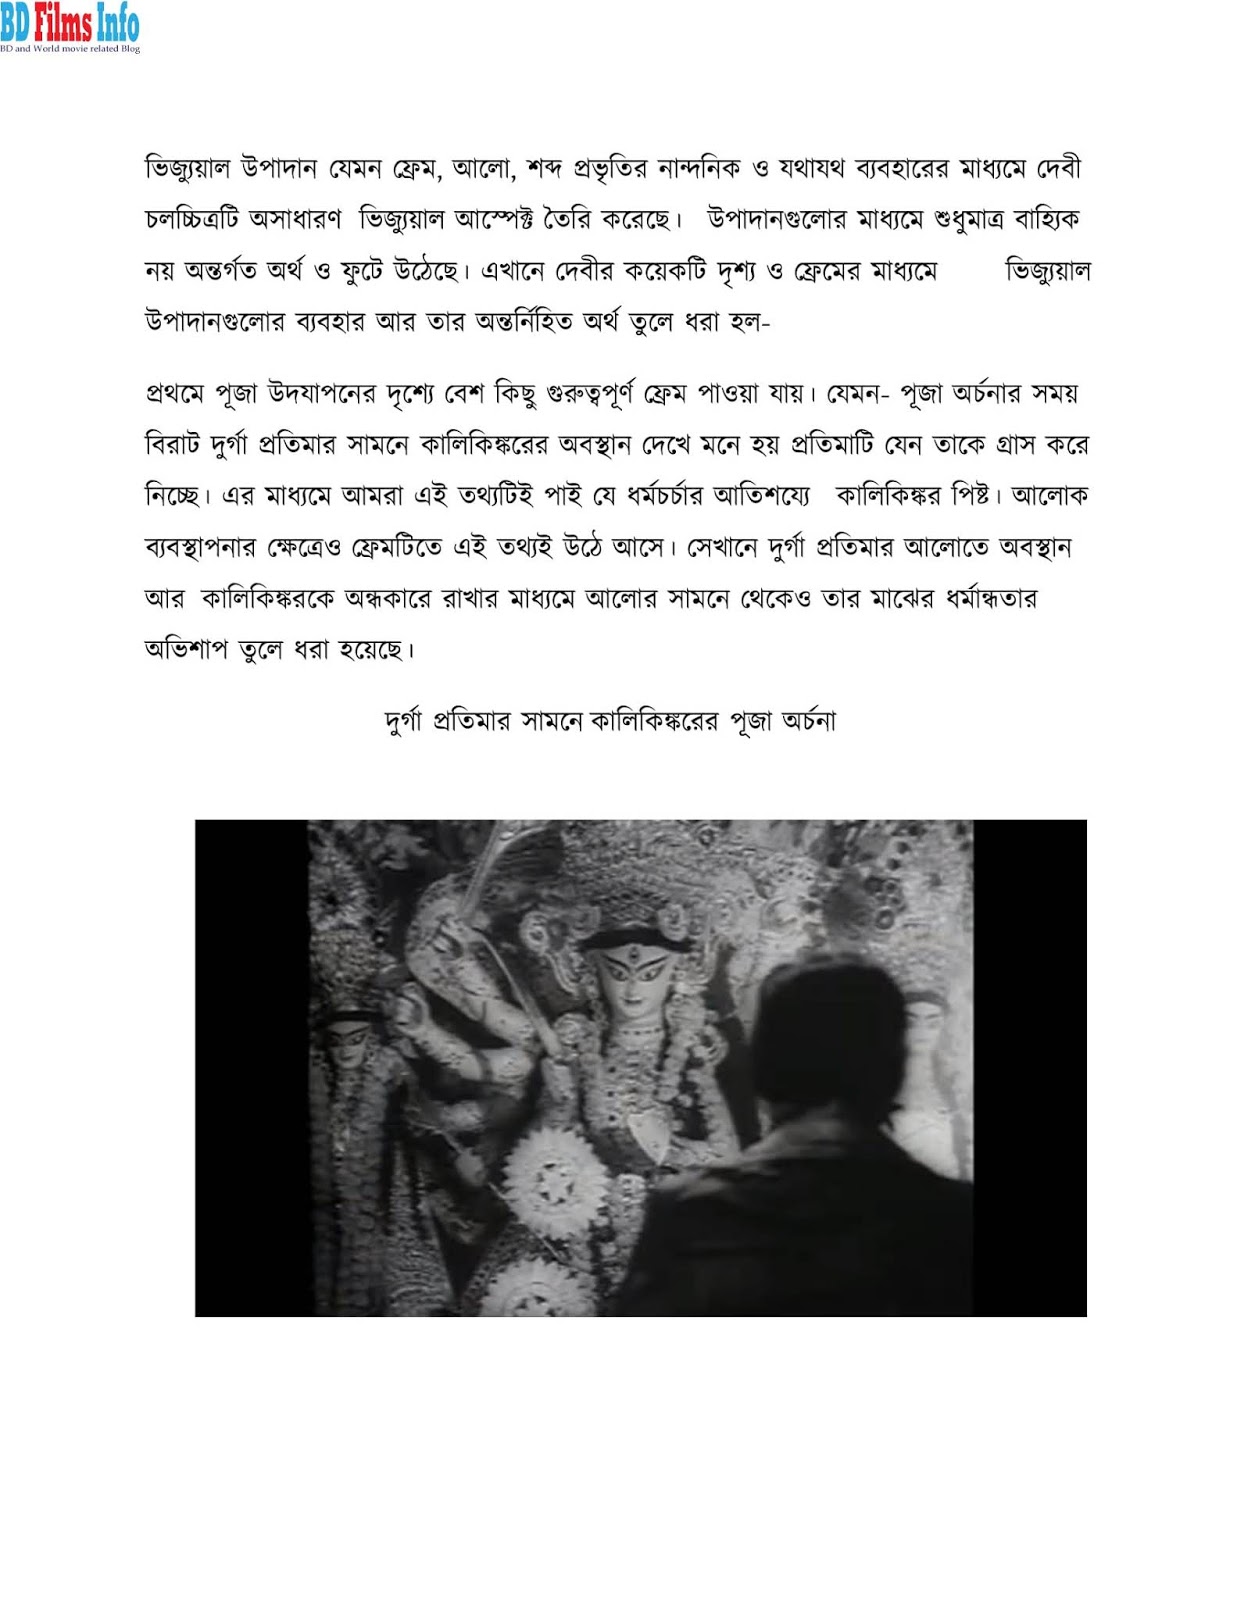 Devi 1960 Bengali Movie Review_BD Films Info Devi 1960 Bengali Movie Directed by Satyajit Ray_BD Films Info  ‘দেবী’ সত্যজিৎ রায় কর্তৃক ১৯৬০ সালে নির্মিত হয়। সত্যজিৎ রায় পরিচালিত দেবী চলচ্চিত্রটির কাহিনী প্রভাত কুমার মুখোপাধ্যায় এর ‘’দেবী’’ গল্প থেকে নেয়া। দেবী চলচ্চিত্রের স্ক্রিপ্ট রচনা করা হয়েছিল ১৮৯৯ সালে রচিত প্রভাত কুমার মুখোপাধ্যায়ের ছোটগল্প দেবী অনুসারে।    Devi 1960 Bengali Movie Review_BD Films Info  Devi 1960 Bengali Movie Review_BD Films Info  Devi 1960 Bengali Movie Review_BD Films Info  Devi 1960 Bengali Movie Review_BD Films Info  Devi 1960 Bengali Movie Review_BD Films Info  Devi 1960 Bengali Movie Review_BD Films Info  Devi 1960 Bengali Movie Review_BD Films Info  Devi 1960 Bengali Movie Review_BD Films Info  Devi 1960 Bengali Movie Review_BD Films Info  Devi 1960 Bengali Movie Review_BD Films Info  Devi 1960 Bengali Movie Review_BD Films Info  Devi 1960 Bengali Movie Review_BD Films Info  Devi 1960 Bengali Movie Review_BD Films Info  Devi 1960 Bengali Movie Review_BD Films Info  Devi 1960 Bengali Movie Review_BD Films Info  Devi 1960 Bengali Movie Review_BD Films Info  Devi 1960 Bengali Movie Review_BD Films Info  Devi 1960 Bengali Movie Review_BD Films Info  Devi 1960 Bengali Movie Review_BD Films Info  Devi 1960 Bengali Movie Review_BD Films Info  Devi 1960 Bengali Movie Review_BD Films Info  Devi 1960 Bengali Movie Review_BD Films Info  Devi 1960 Bengali Movie Review_BD Films Info  Devi 1960 Bengali Movie Review_BD Films Info  Devi 1960 Bengali Movie Review_BD Films Info  Devi 1960 Bengali Movie Review_BD Films Info  Devi 1960 Bengali Movie Review_BD Films Info  Devi 1960 Bengali Movie Review_BD Films Info  Devi 1960 Bengali Movie Review_BD Films Info  Devi 1960 Bengali Movie Review_BD Films Info  Devi 1960 Bengali Movie Review_BD Films Info  Devi 1960 Bengali Movie Review_BD Films Info  Devi 1960 Bengali Movie Review_BD Films Info  Devi 1960 Bengali Movie Review_BD Films Info